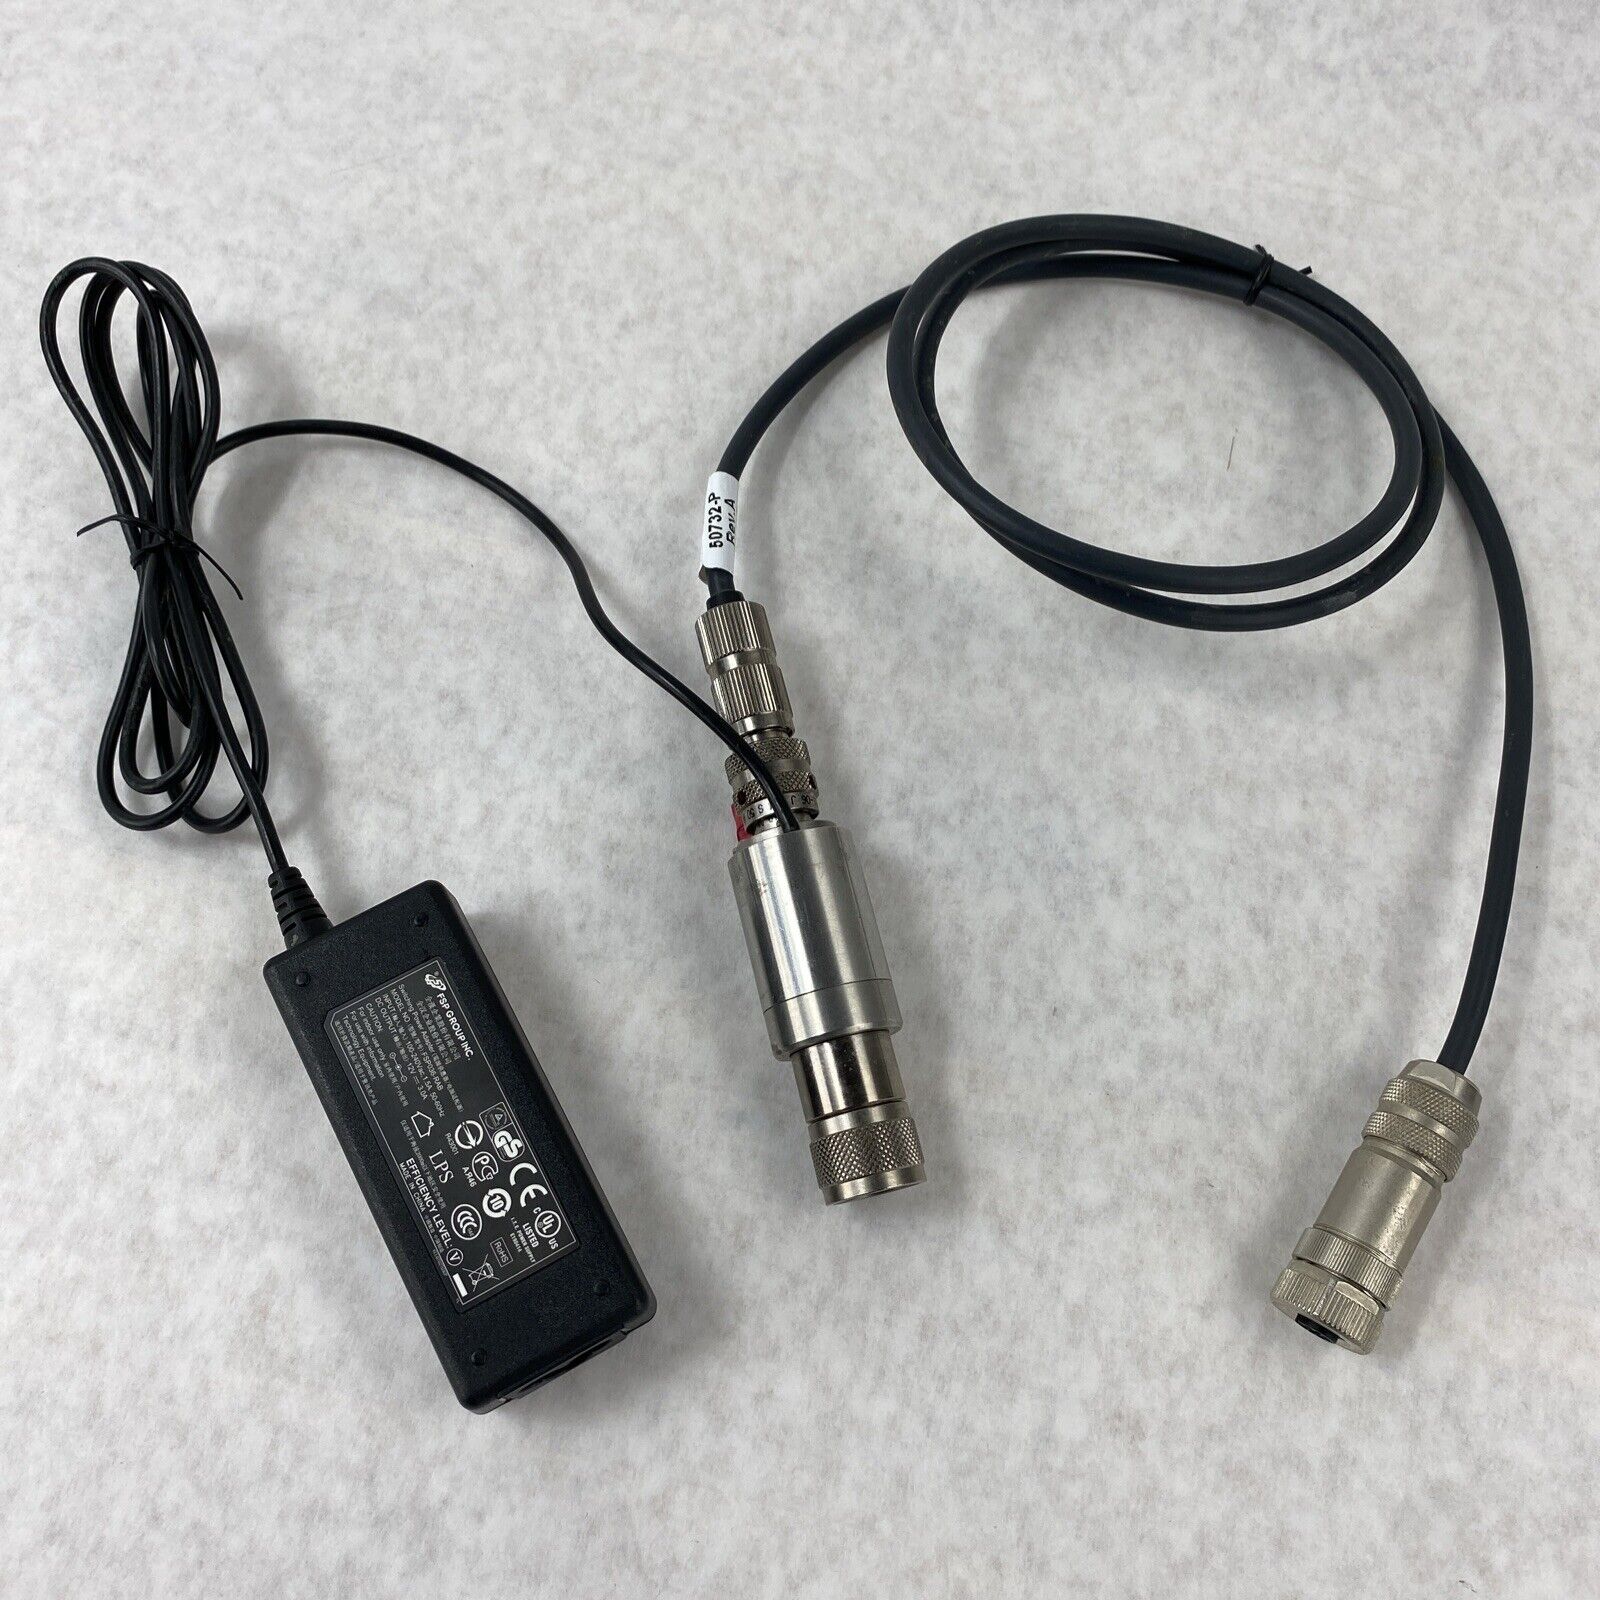 Hamilton 242413 VisiFerm DO Adapter T82/D4 Power Adapter  Cut Wire